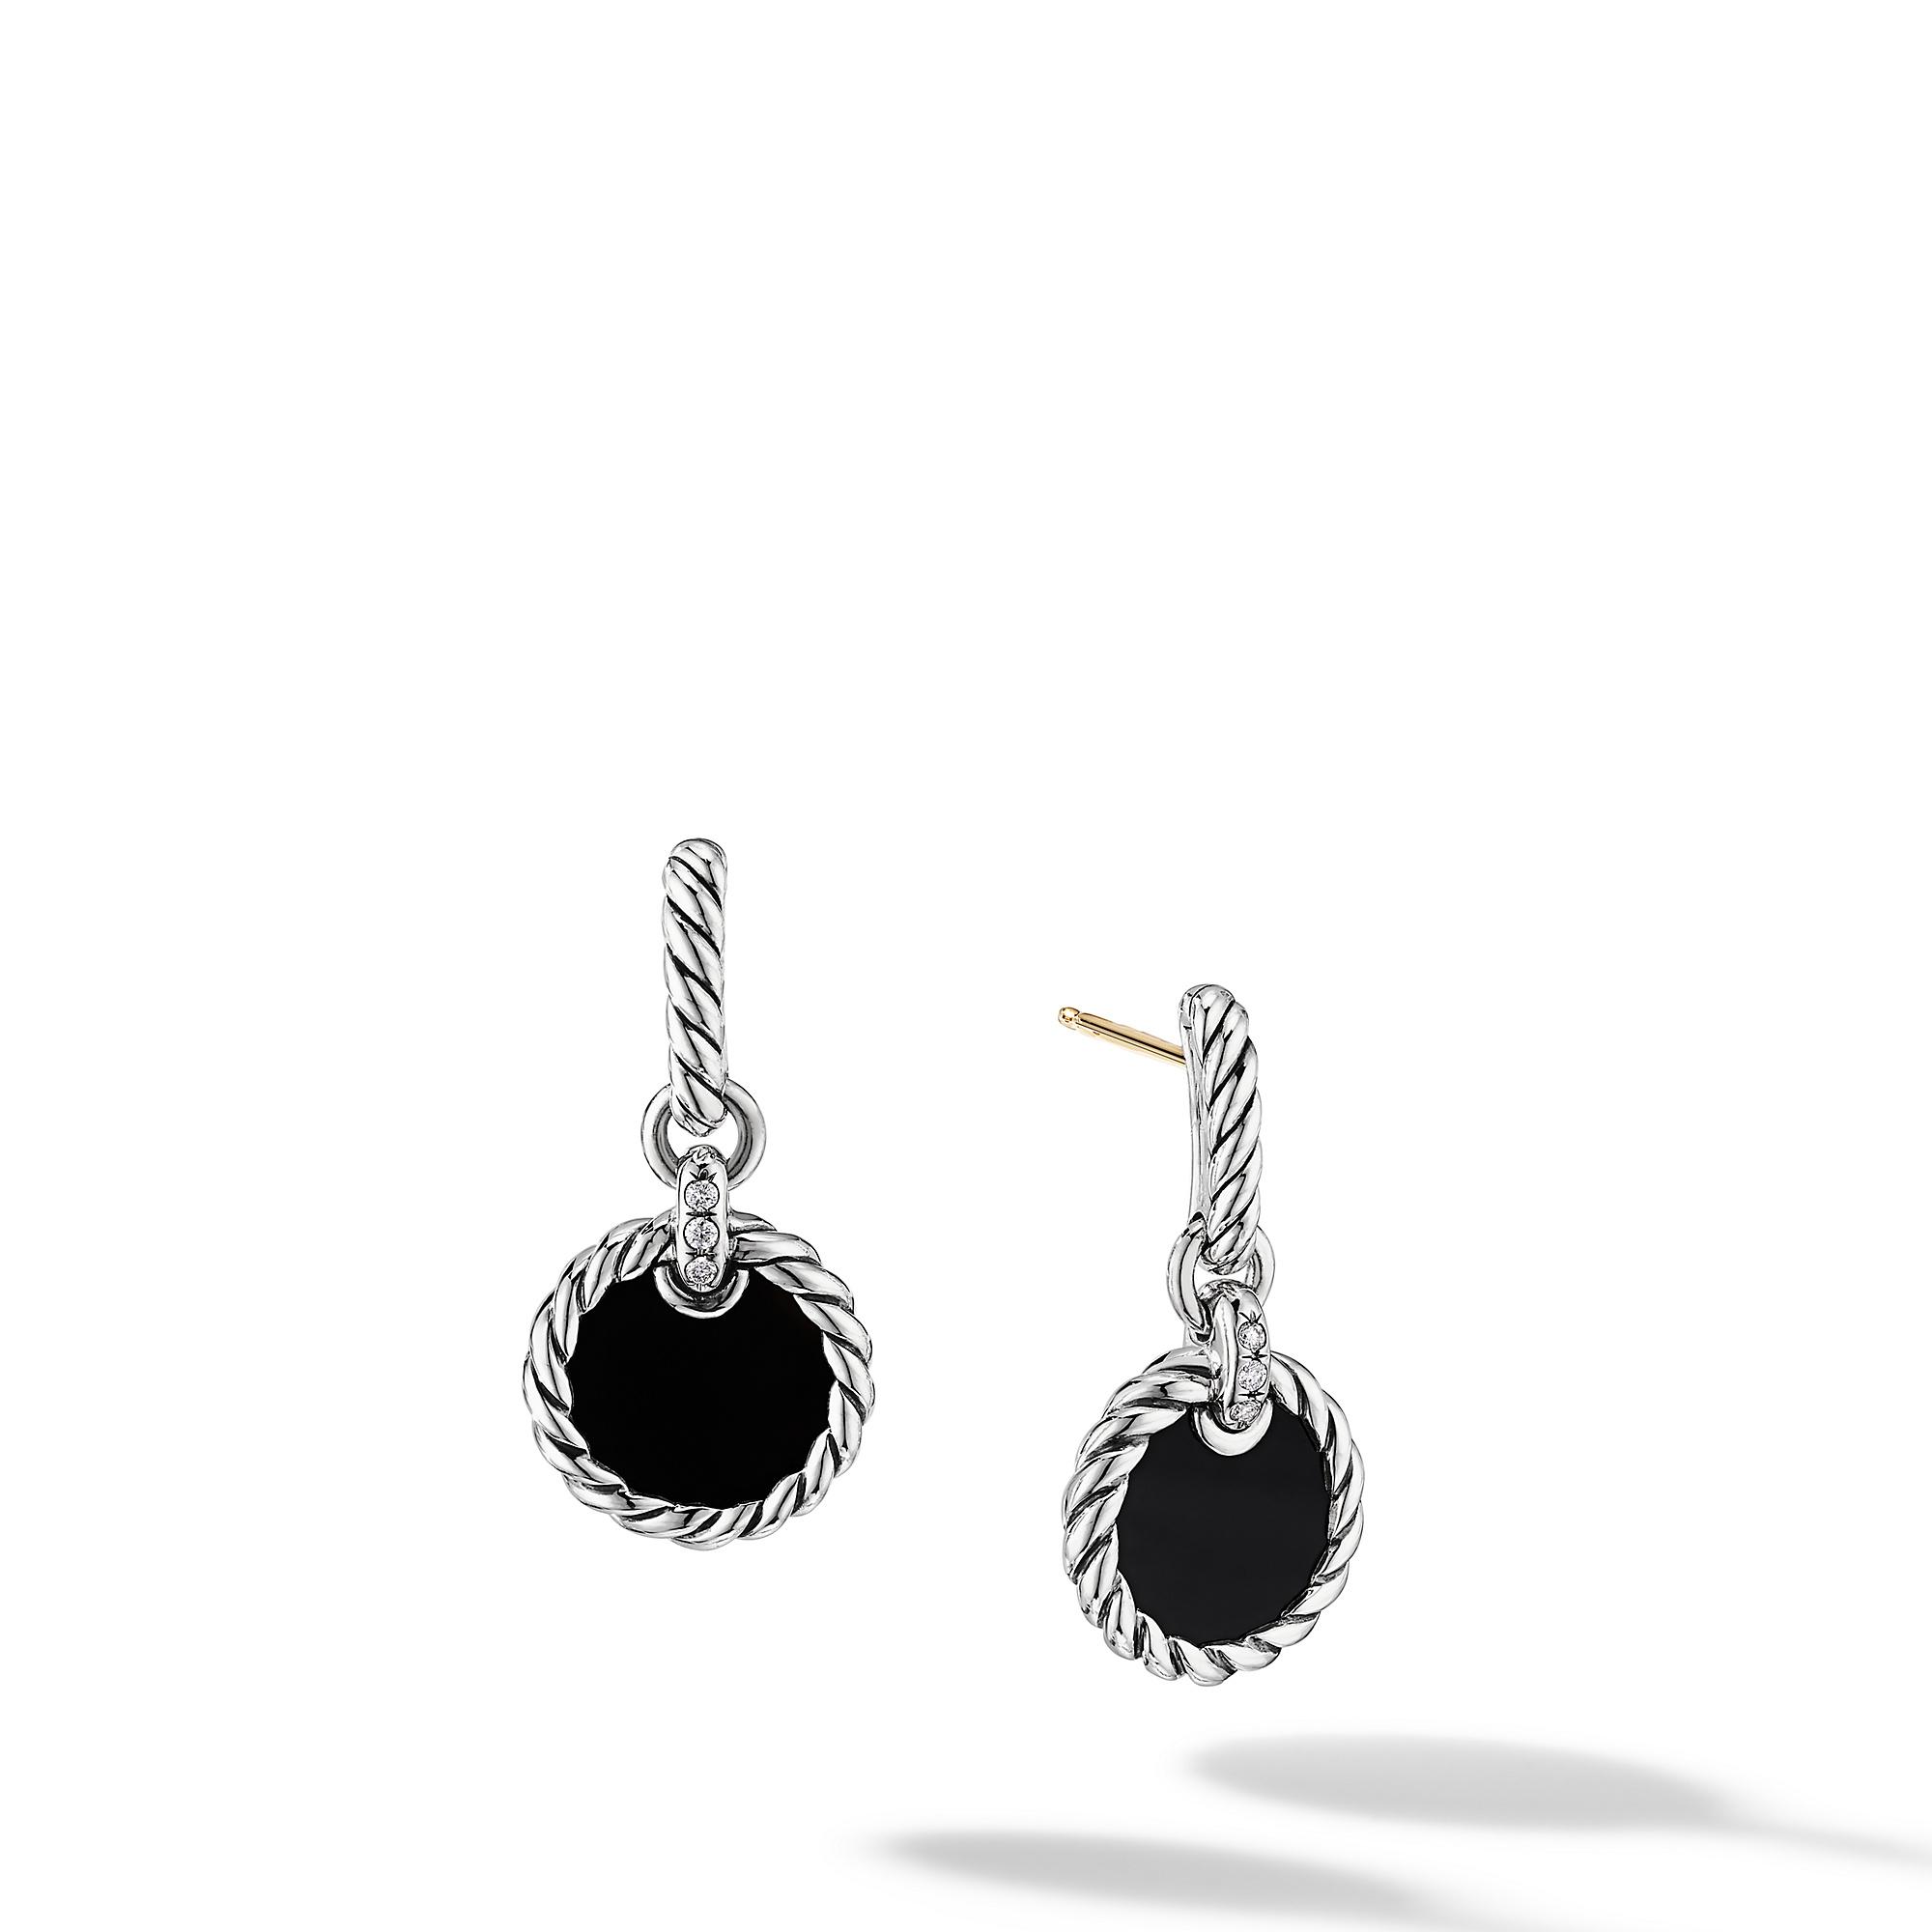 David Yurman Elements Drop Earrings with Black Onyx and Pave Diamonds, 10mm